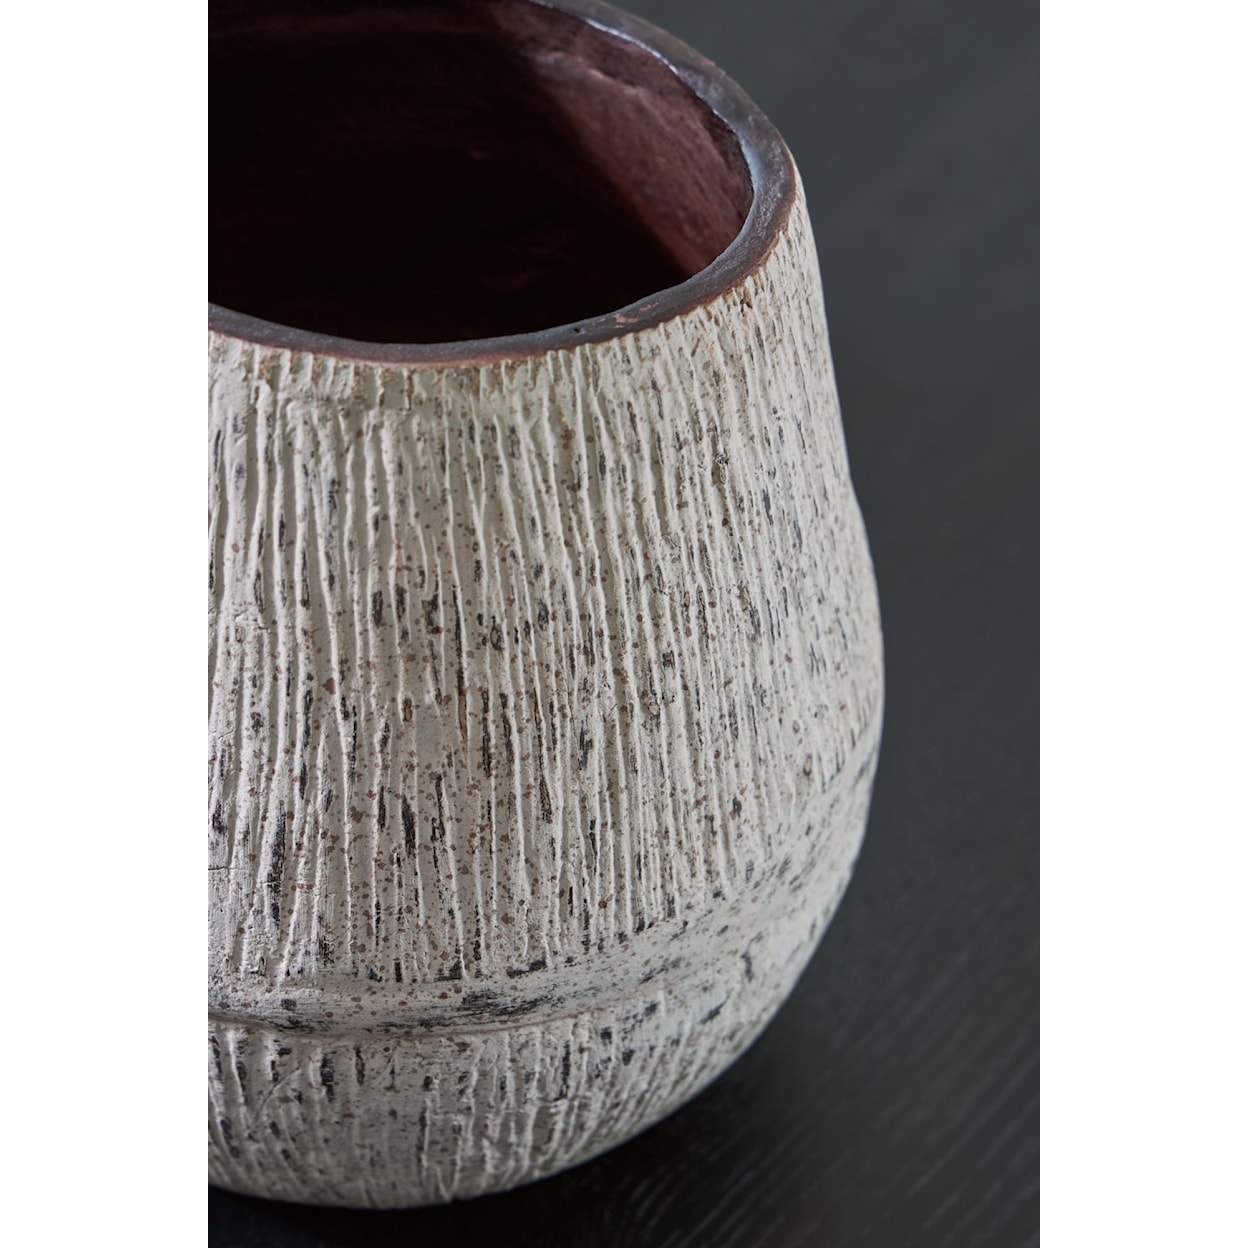 Ashley Furniture Signature Design Claymount Vase